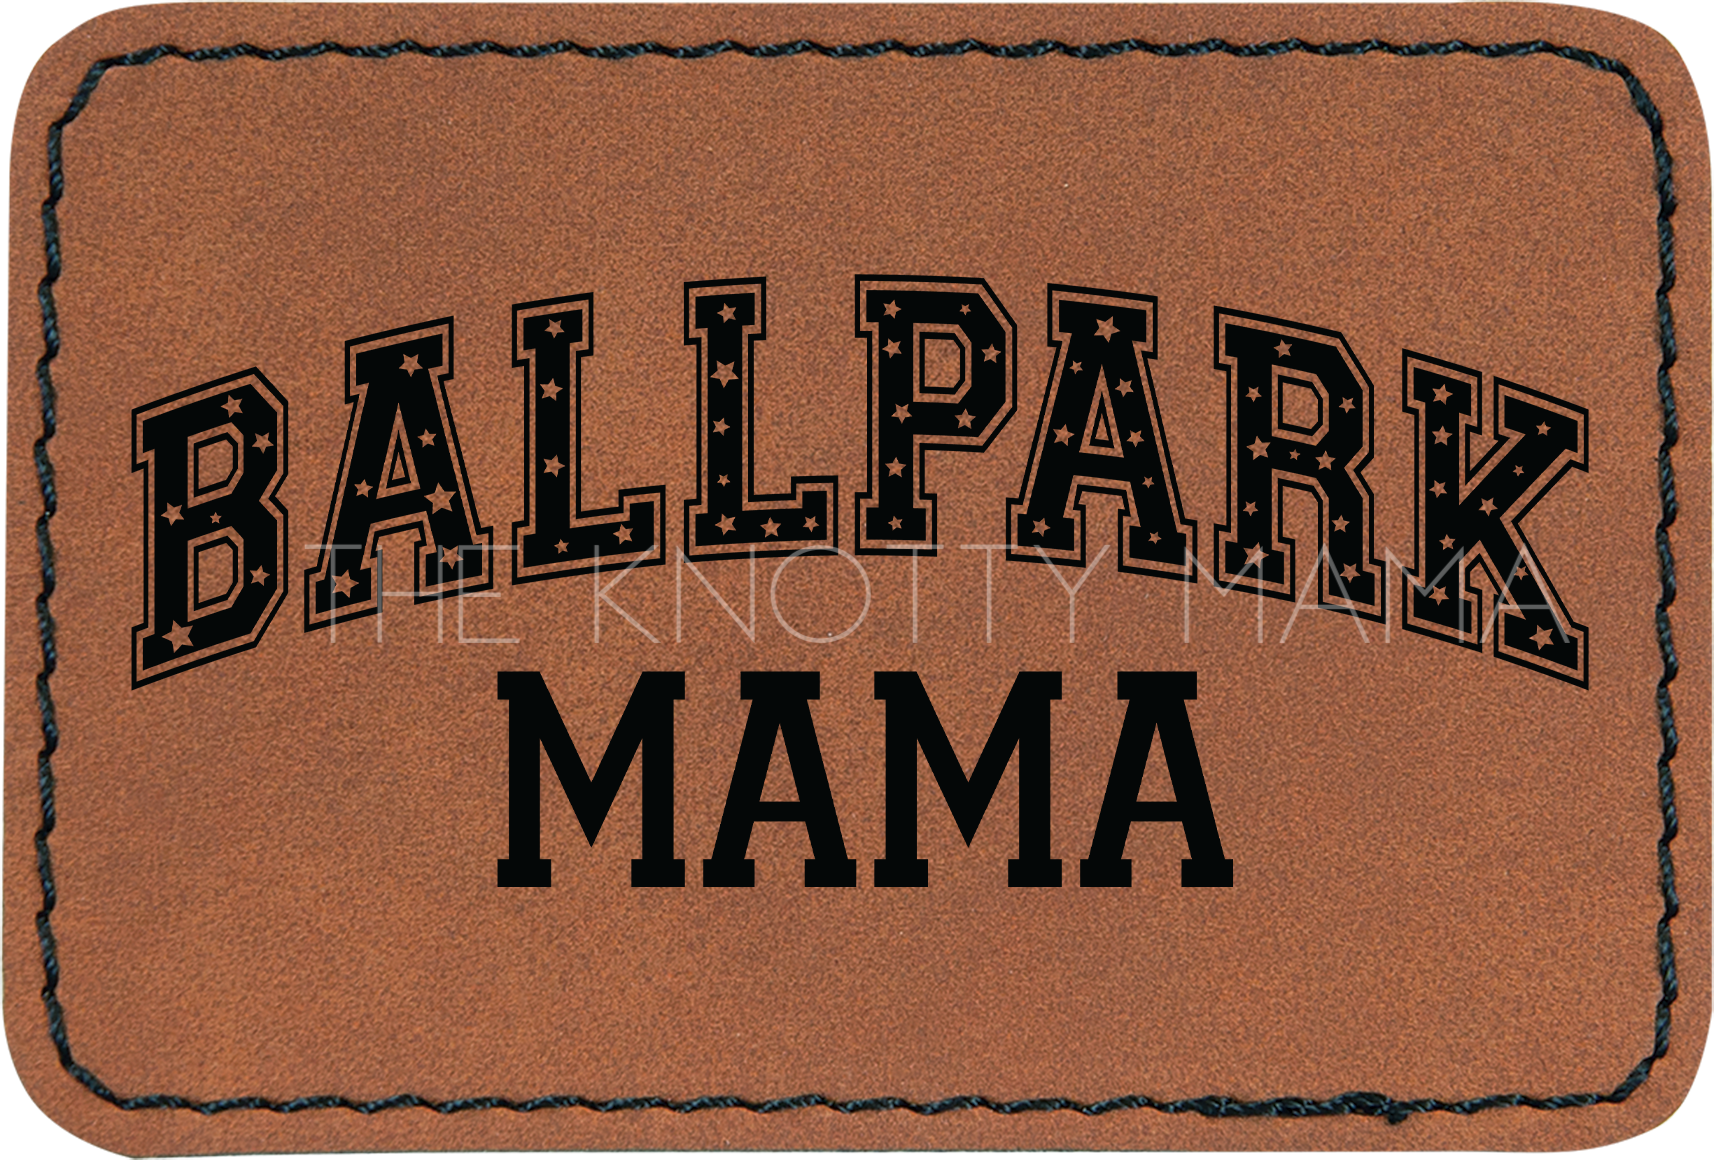 Star Pattern Ball Park Mama Patch